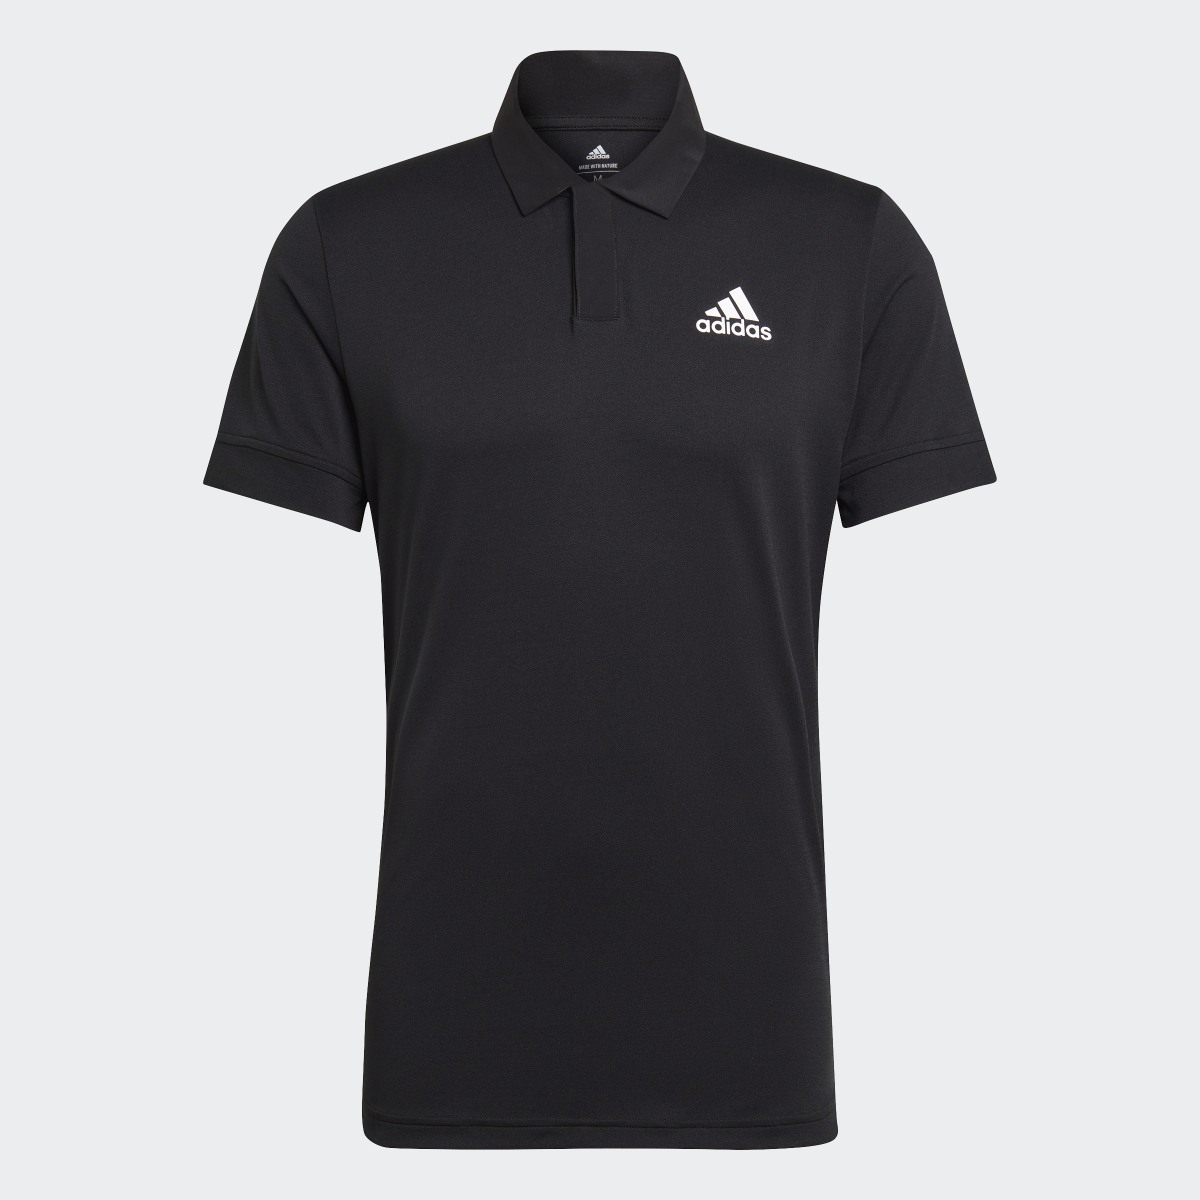 Adidas Tennis New York FreeLift Polo Shirt. 5